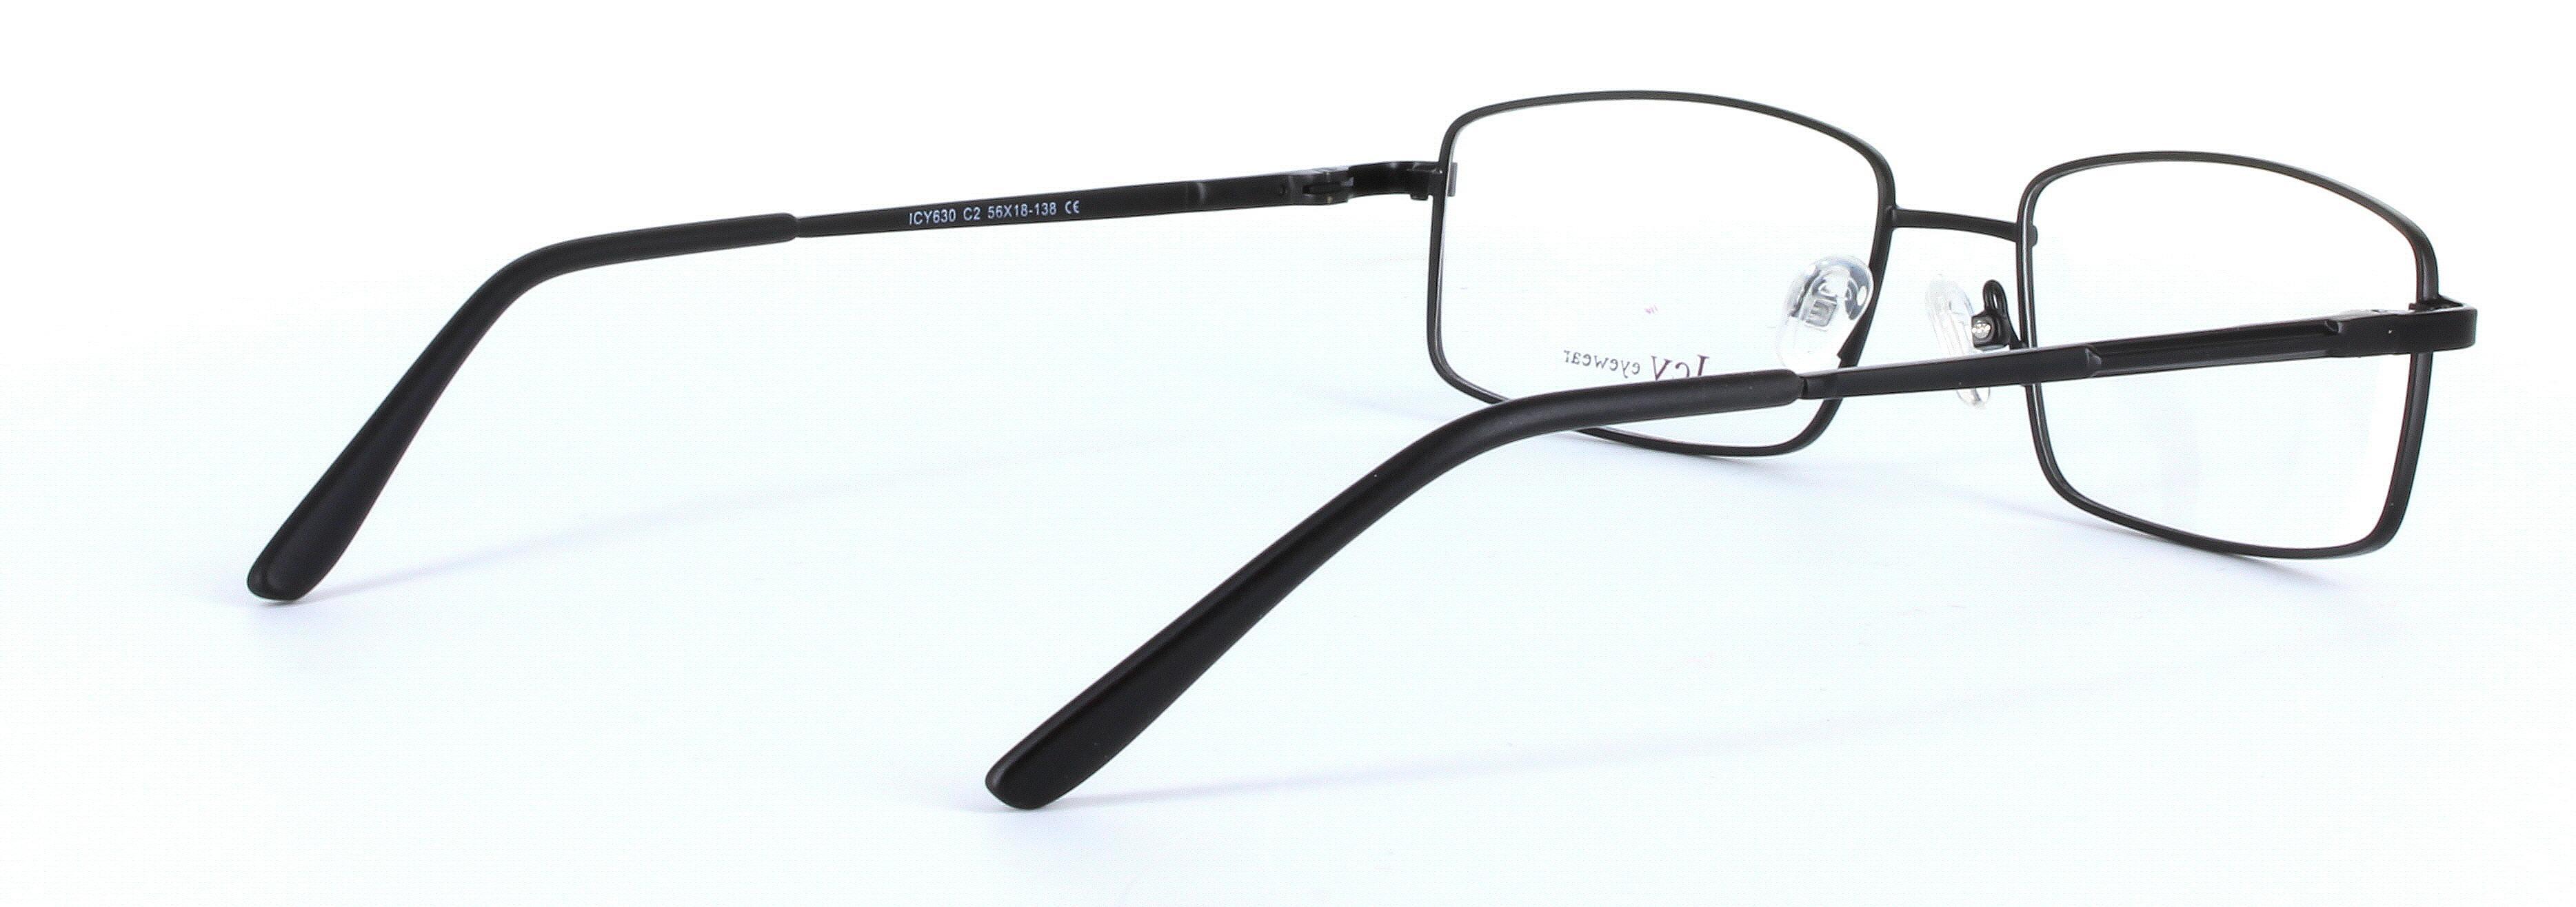 Chester Black Full Rim Rectangular Metal Glasses - Image View 4